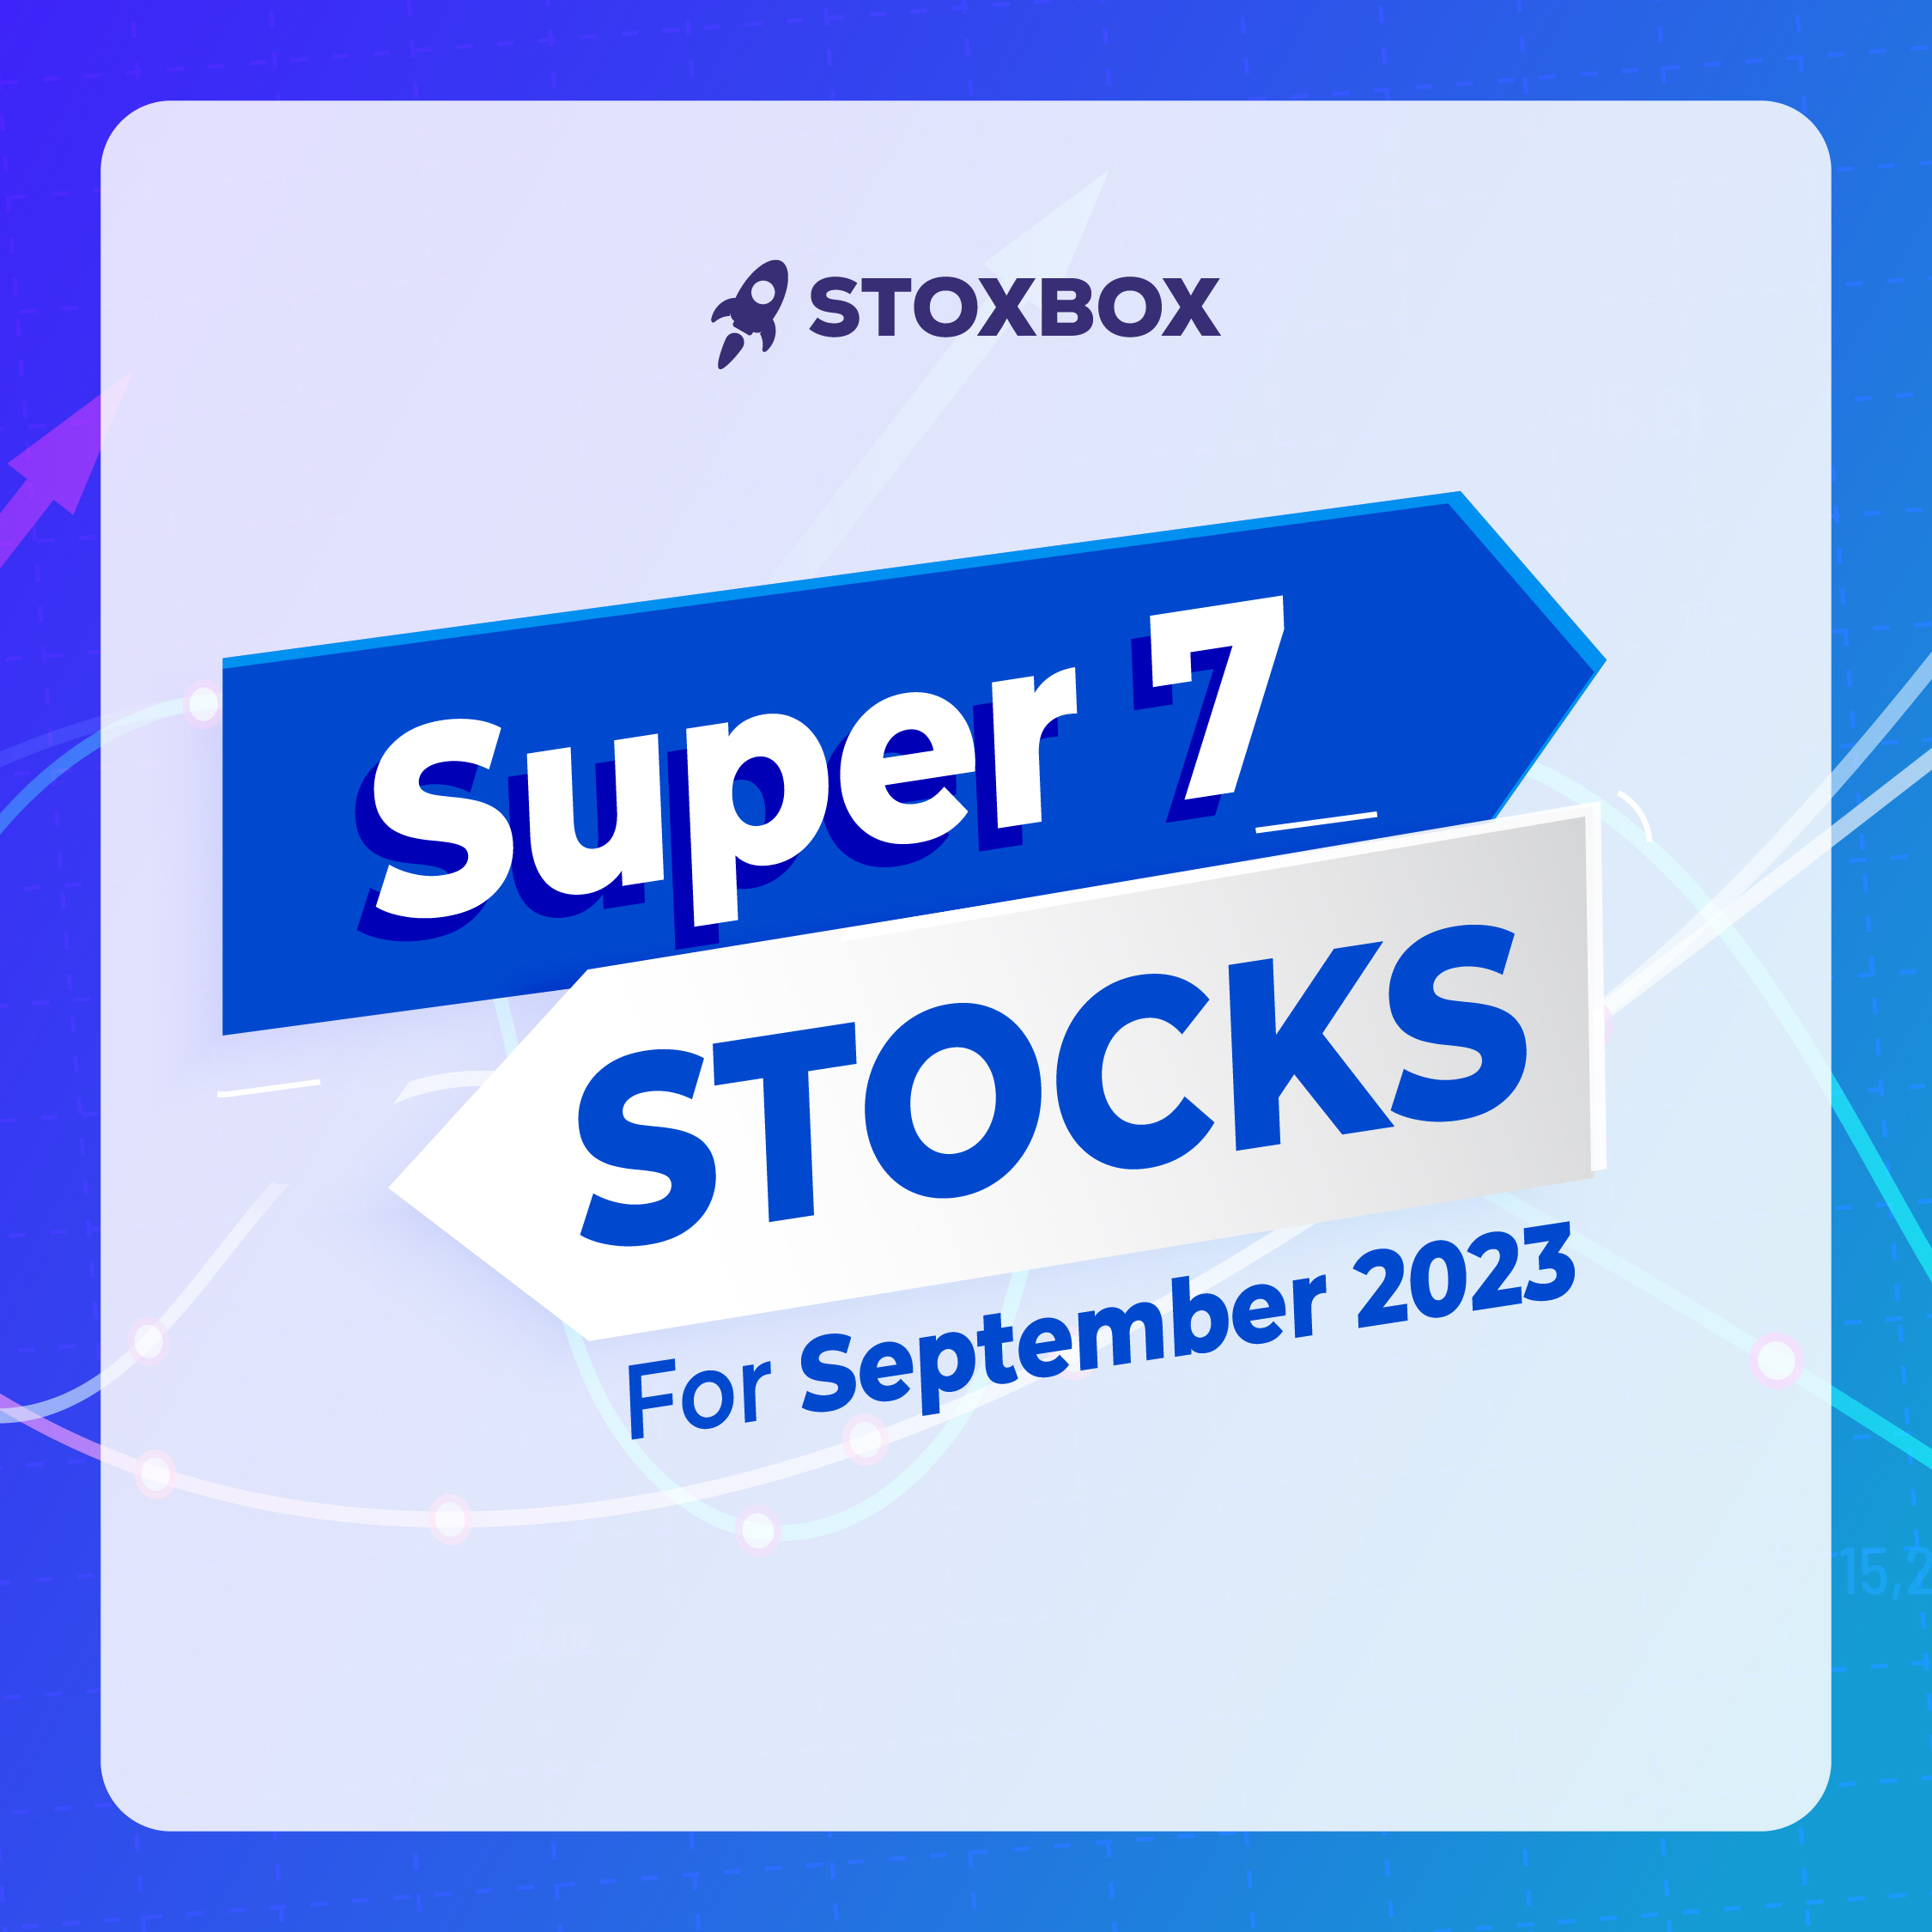 Super 7 stocks